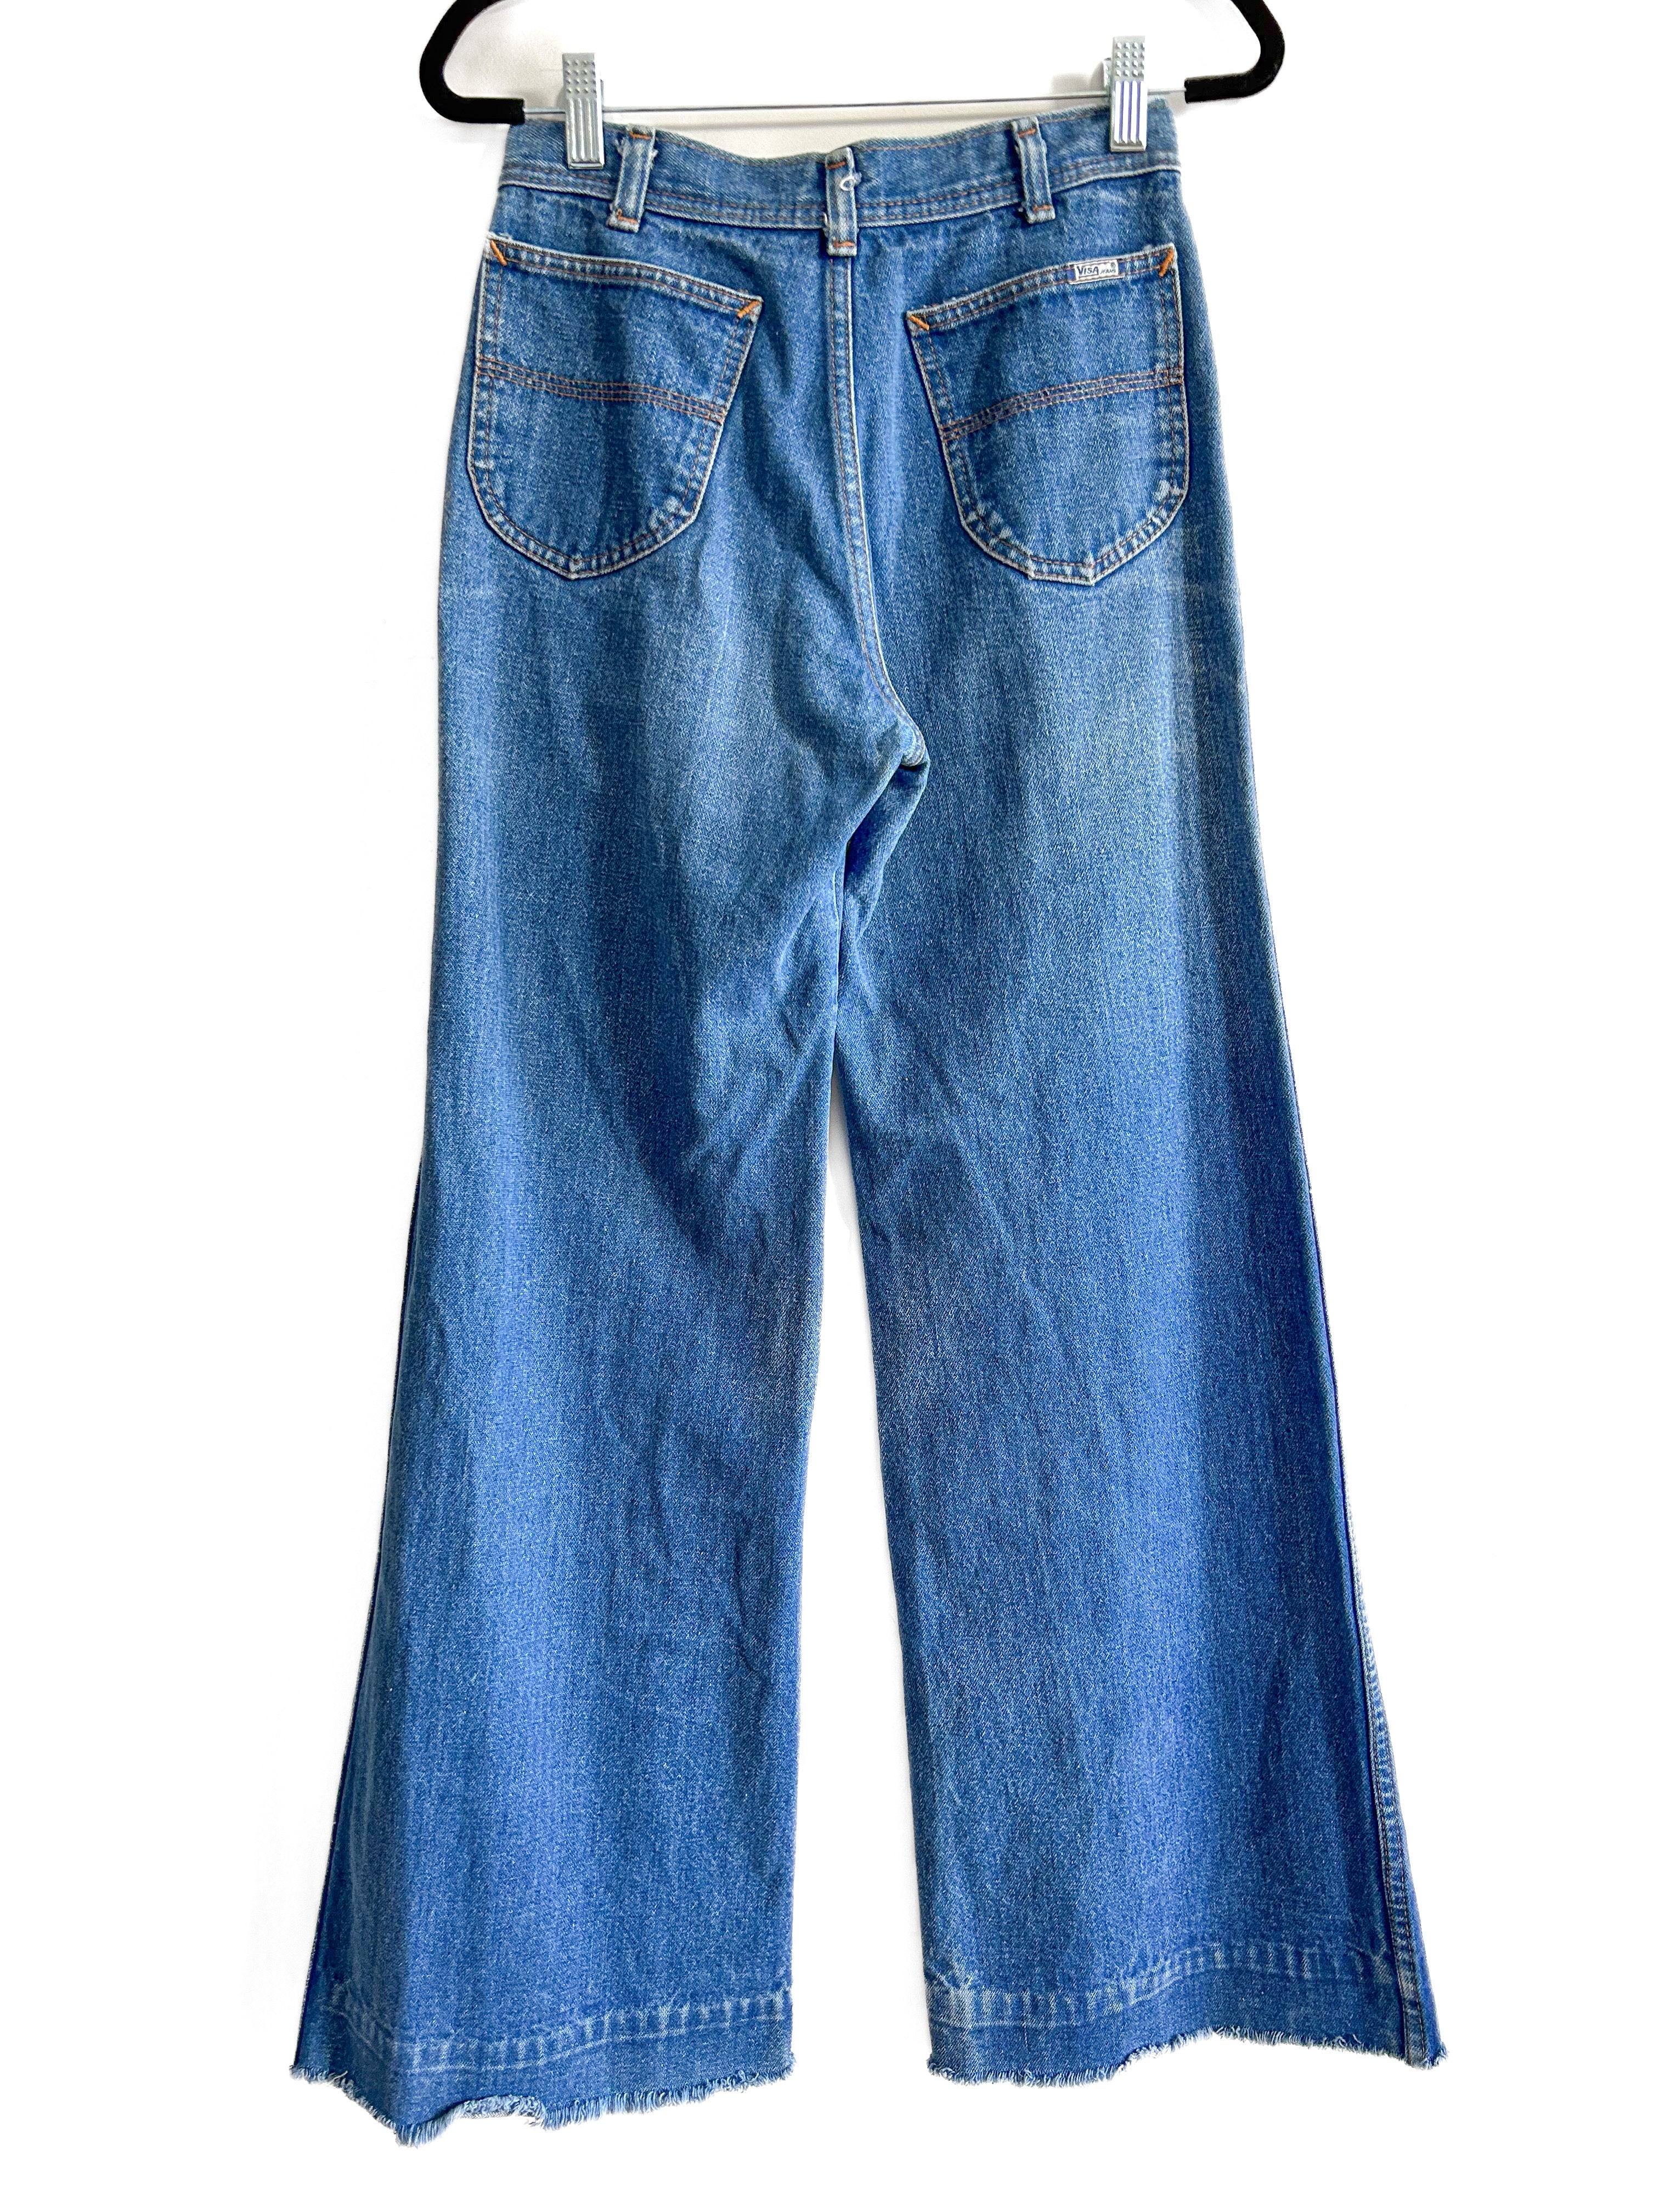 Size 27, Wide Leg Pants, Highwaist Pants, 1970s Jeans, Elephant Leg Jeans,  FREE USA SHIPPING -  Canada